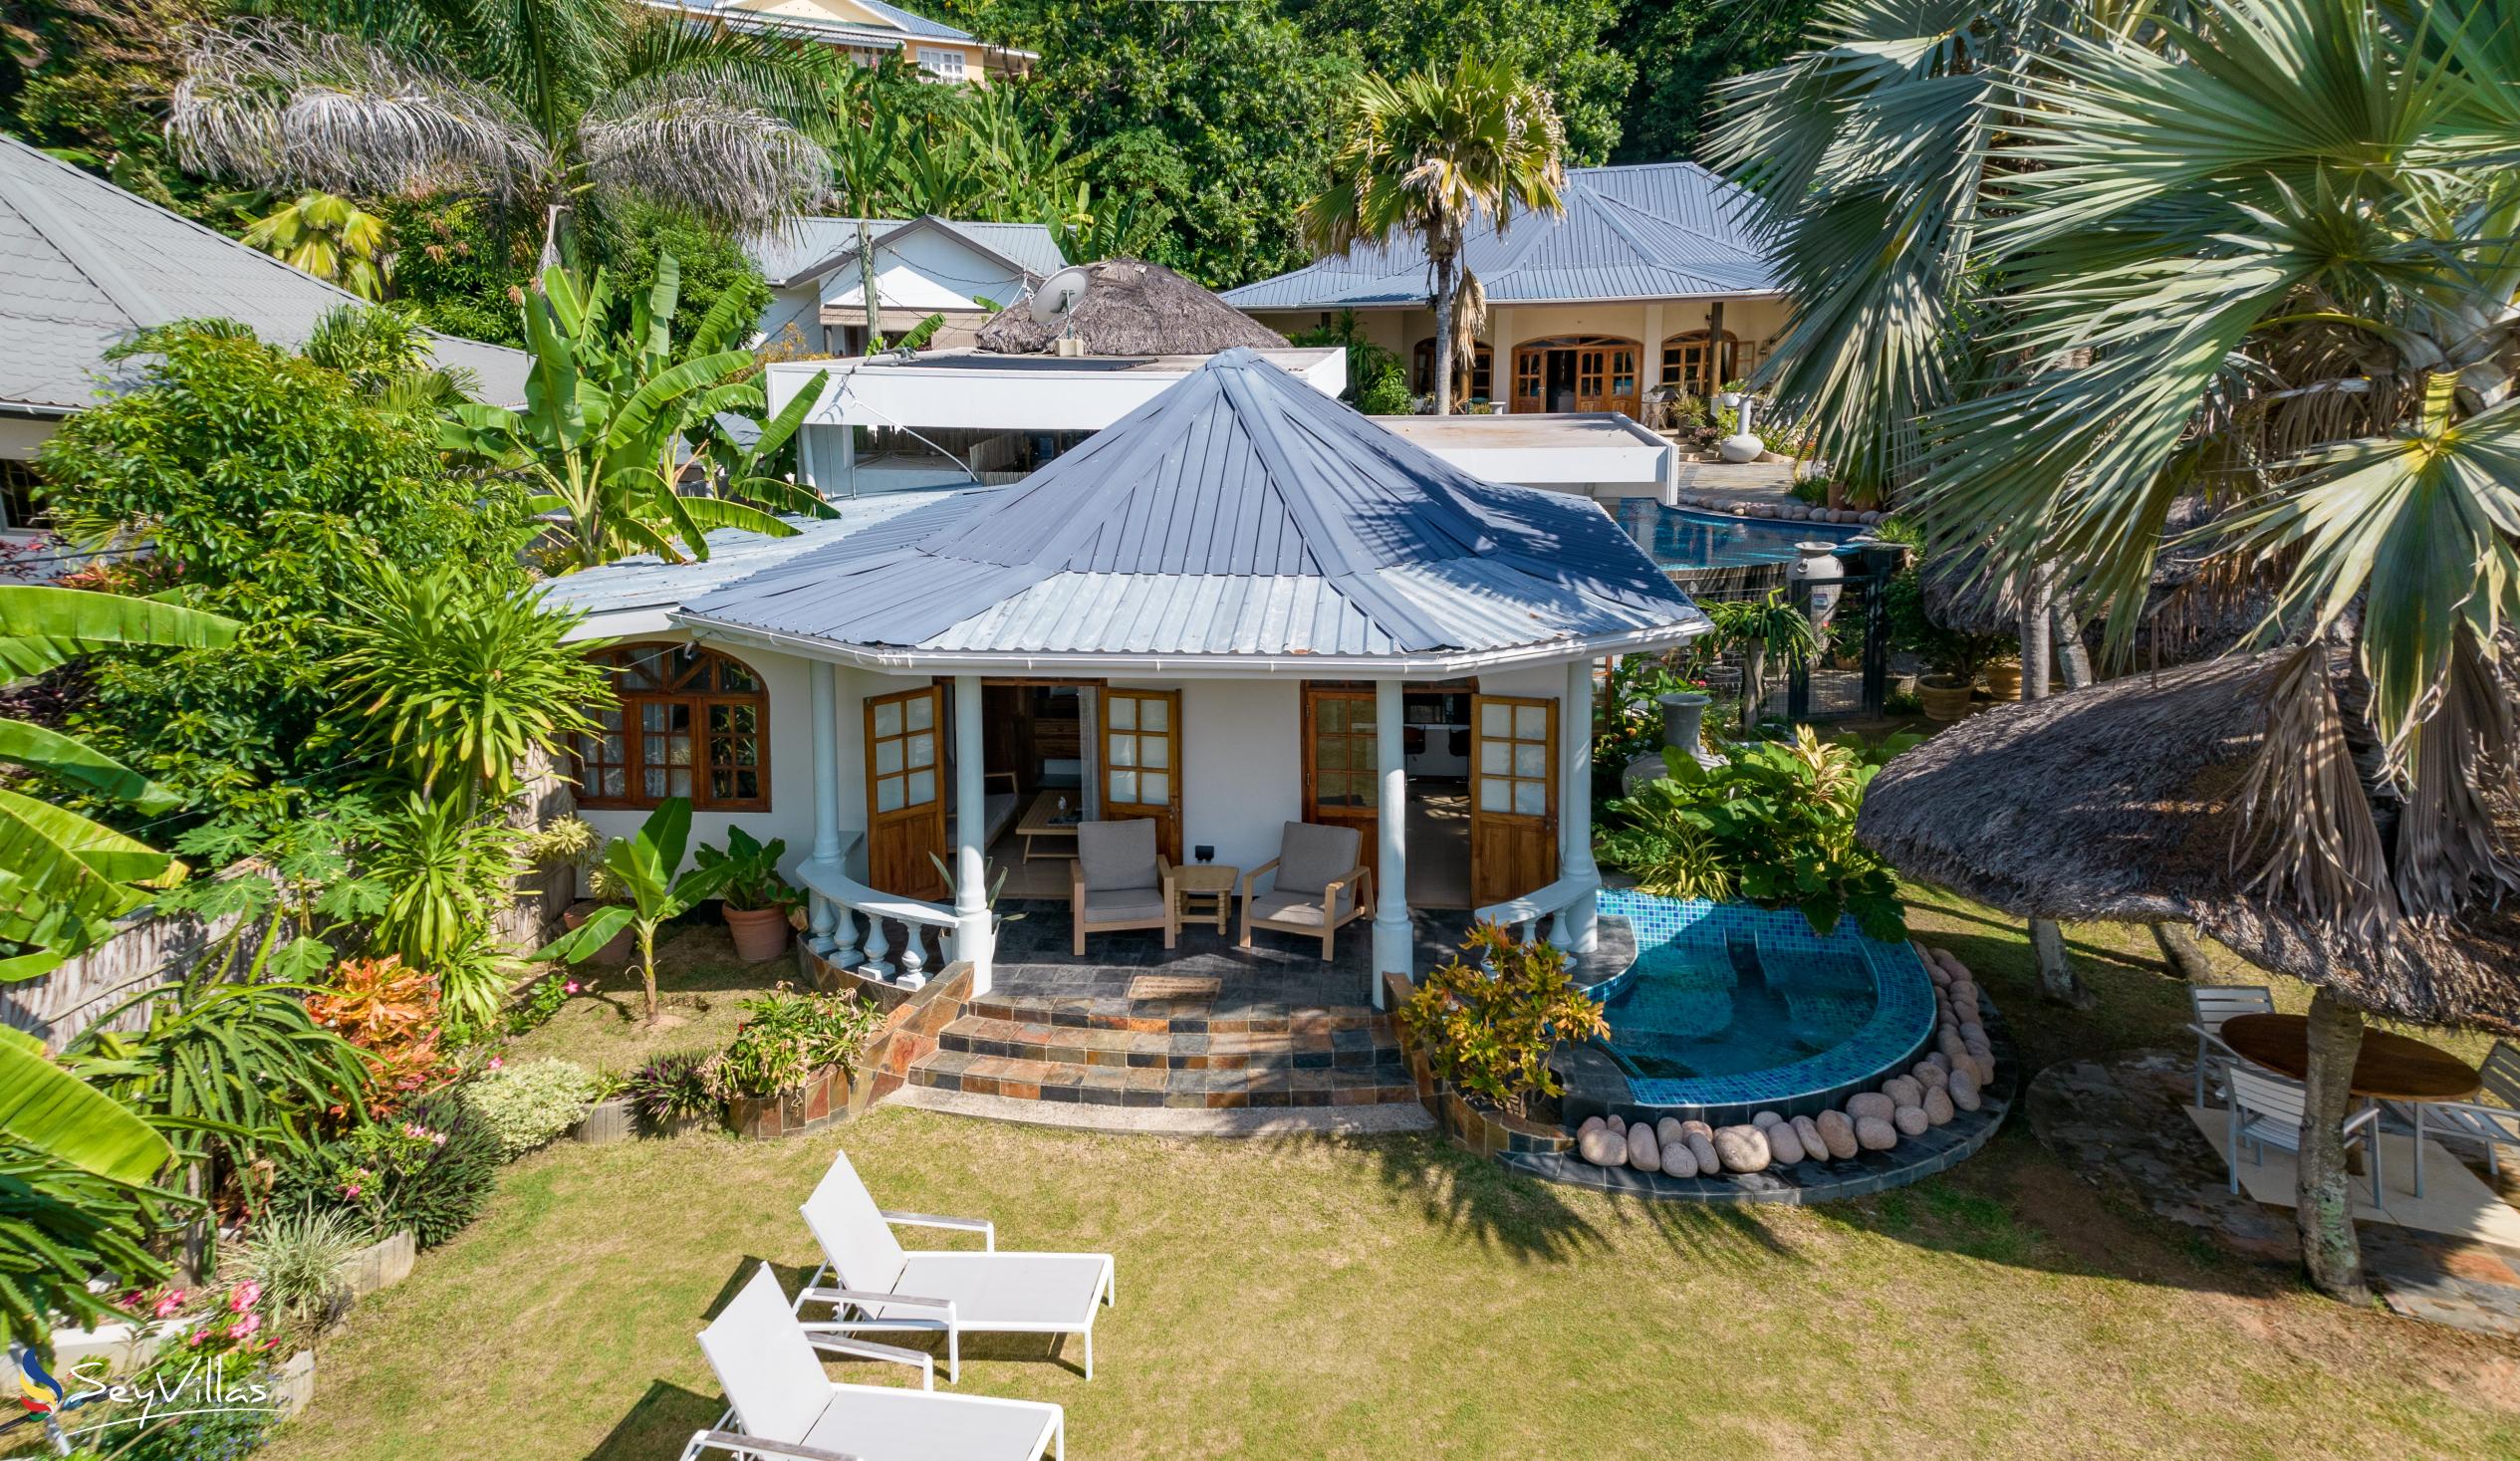 Photo 1: La Petite Maison - Outdoor area - Praslin (Seychelles)